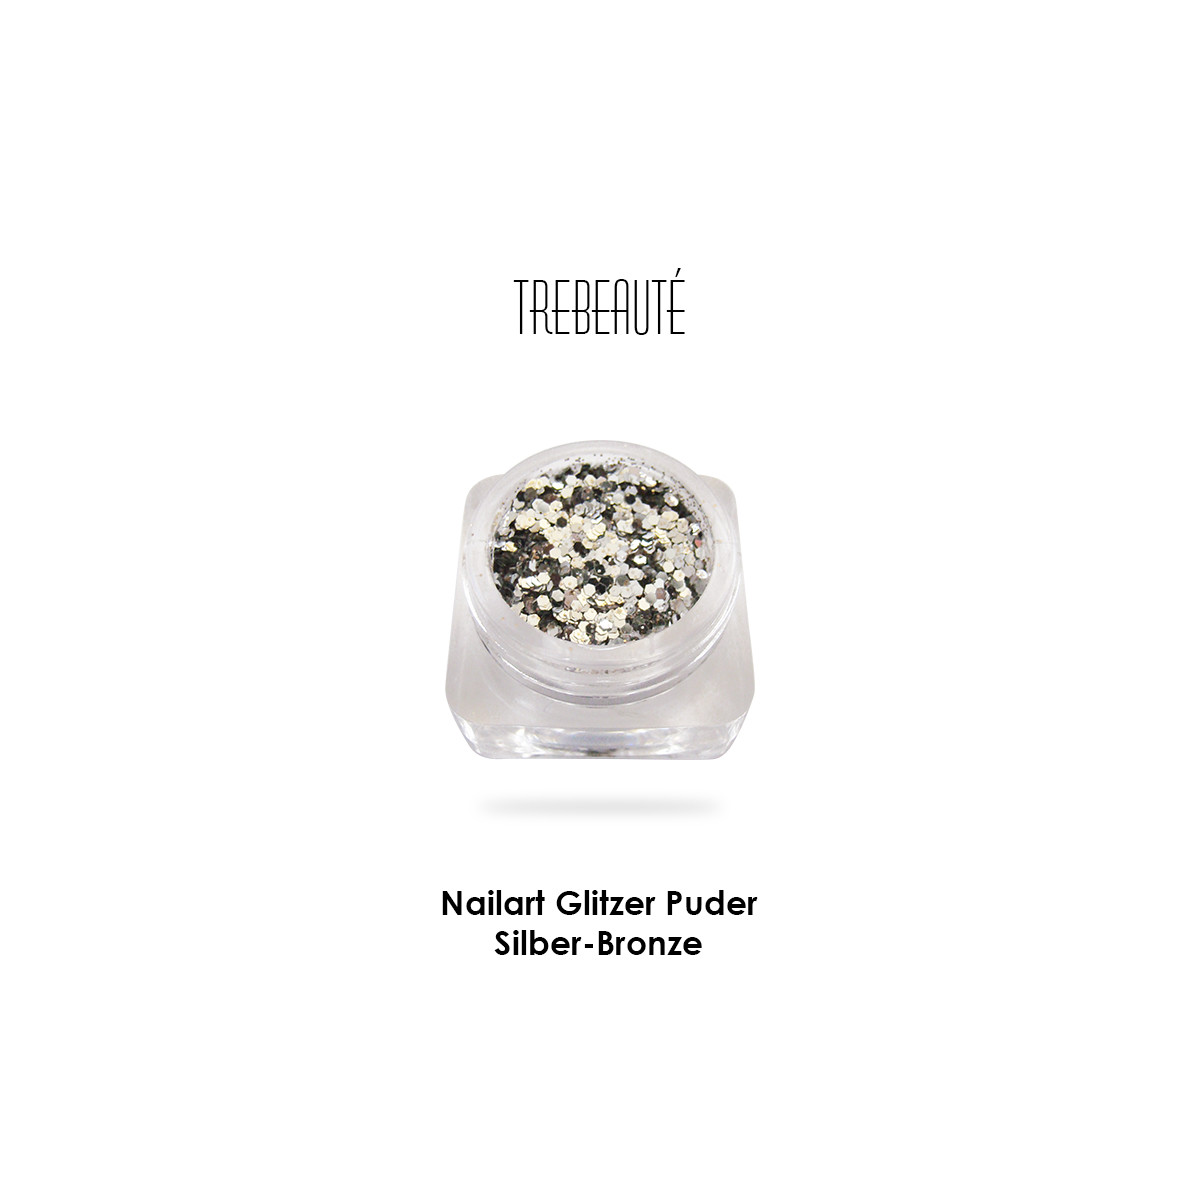 Nailart Glitzer Puder & Glitterstaub, Silber-Bronze